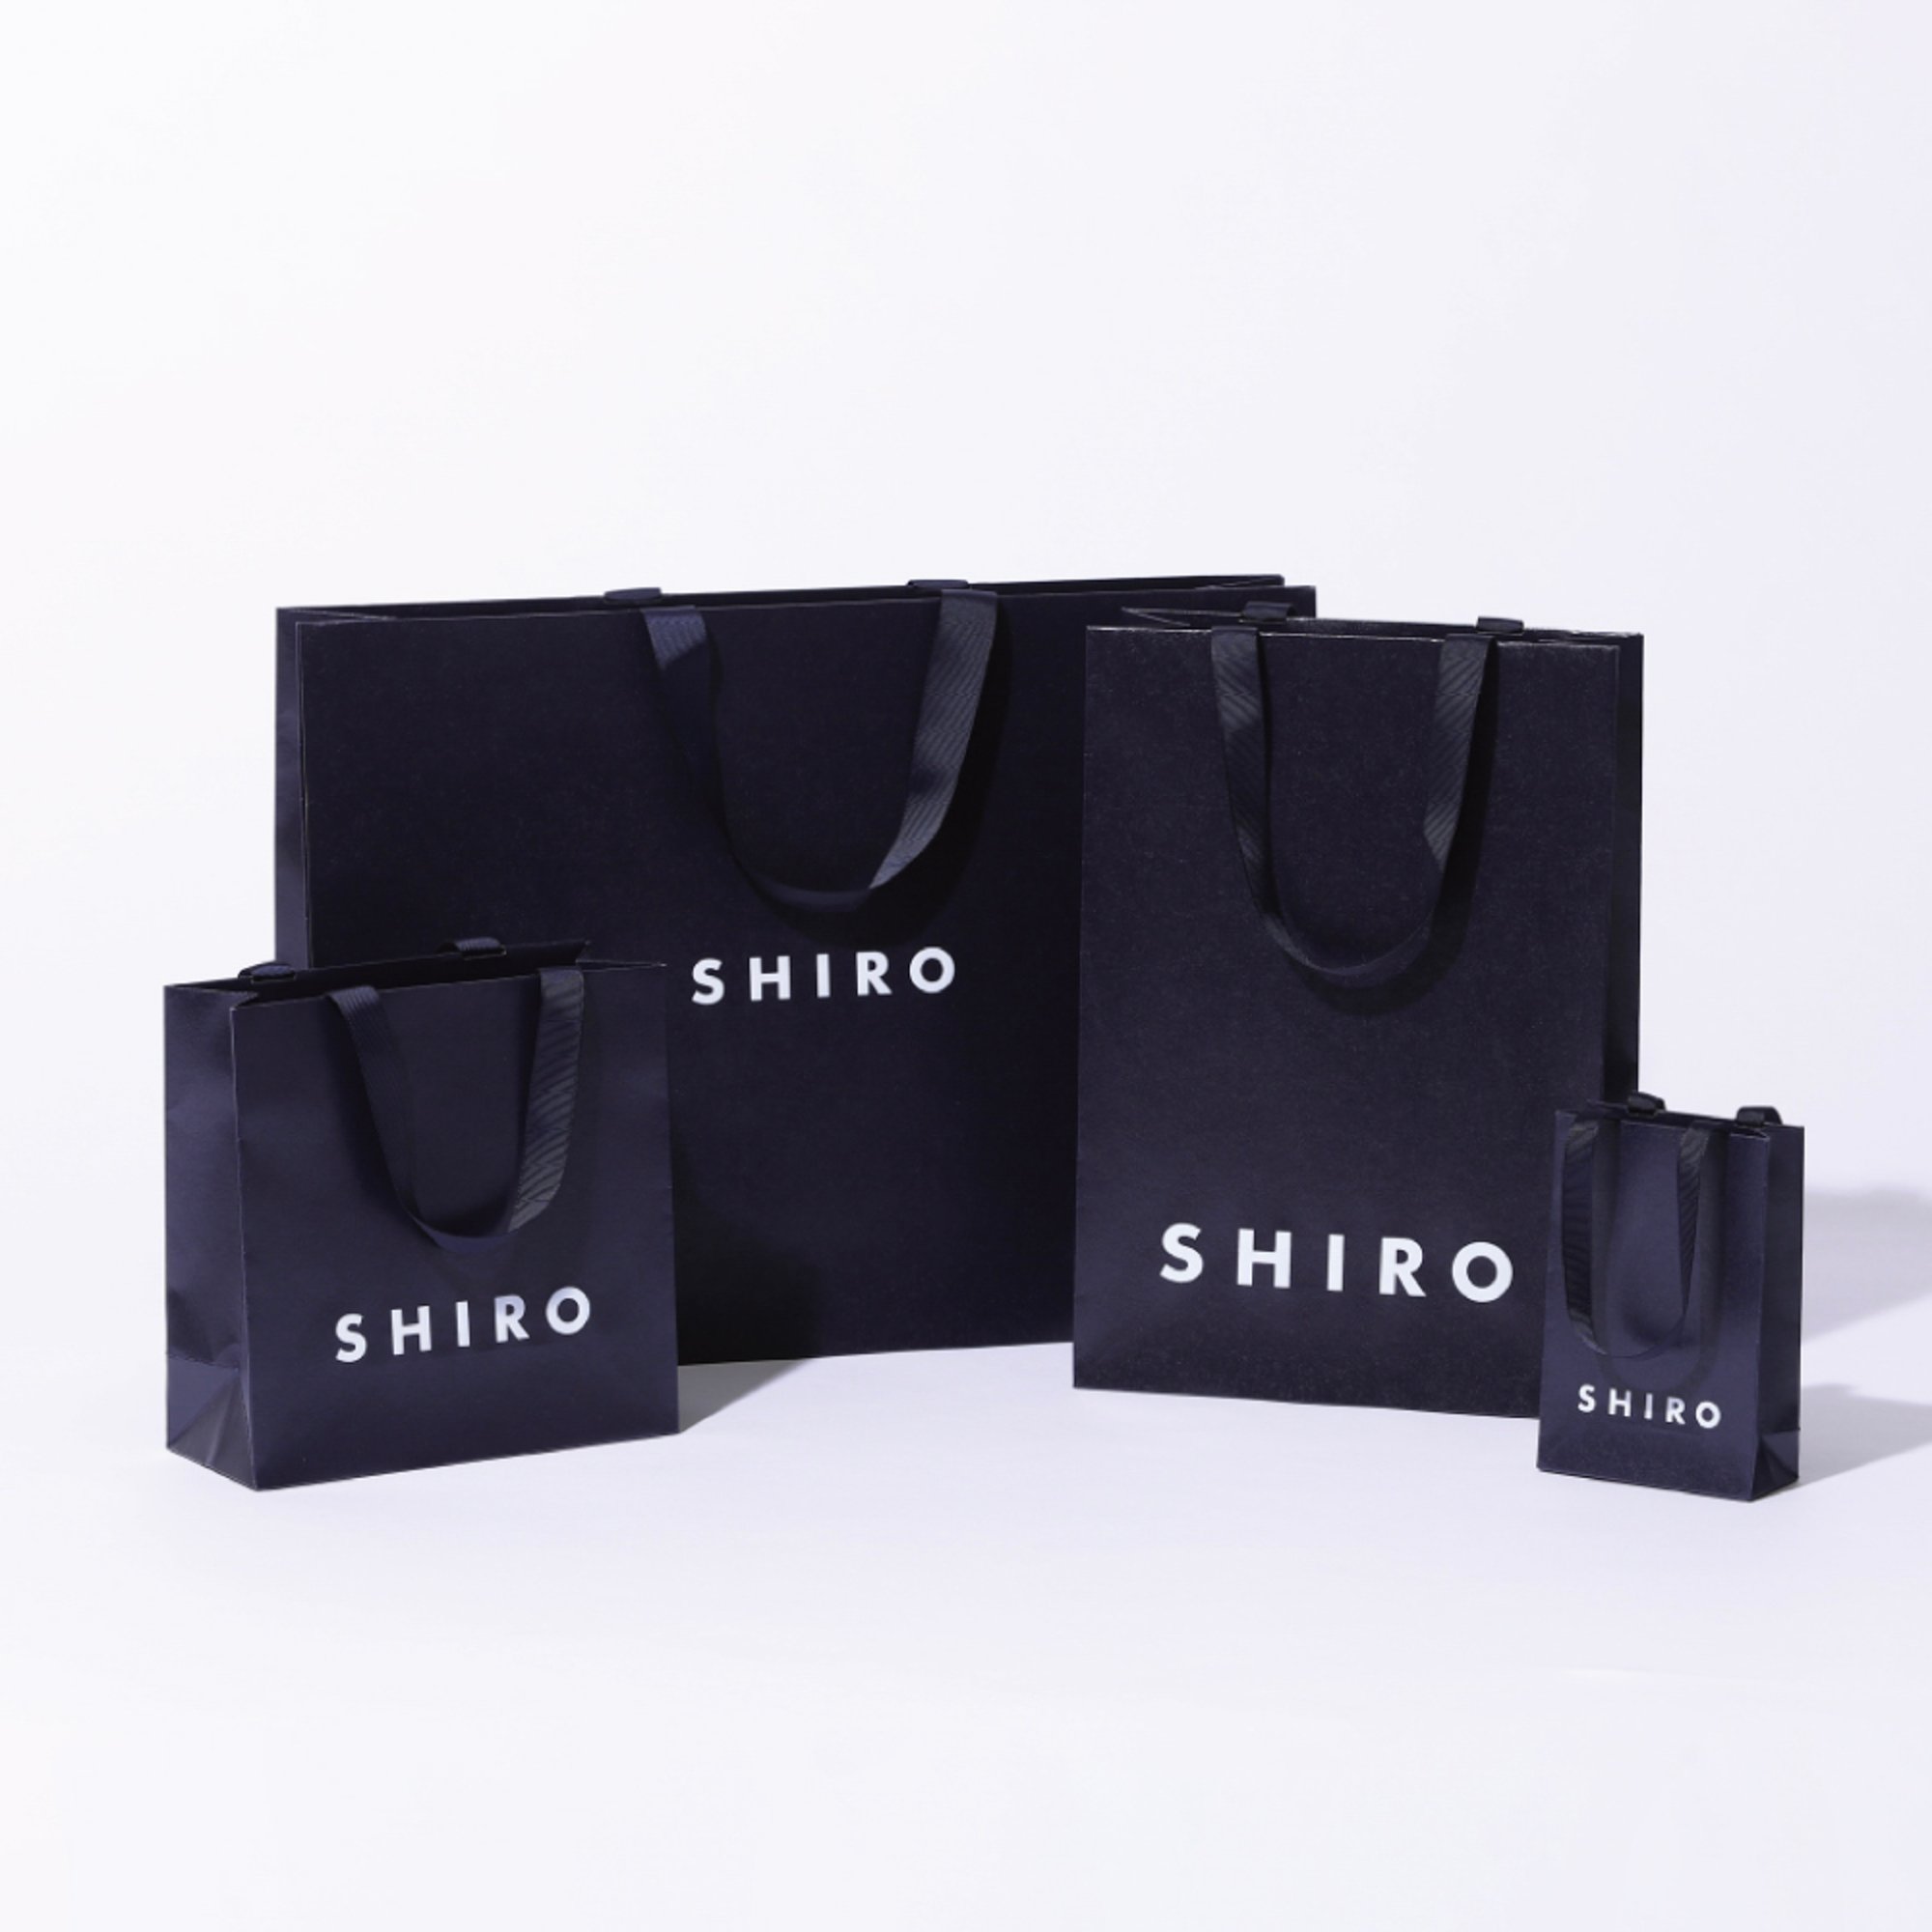 SHIROが紙箱入り製品の生産を終了し、本体価格を値下げ 手さげ紙袋、雨よけカバーなどの有料化も